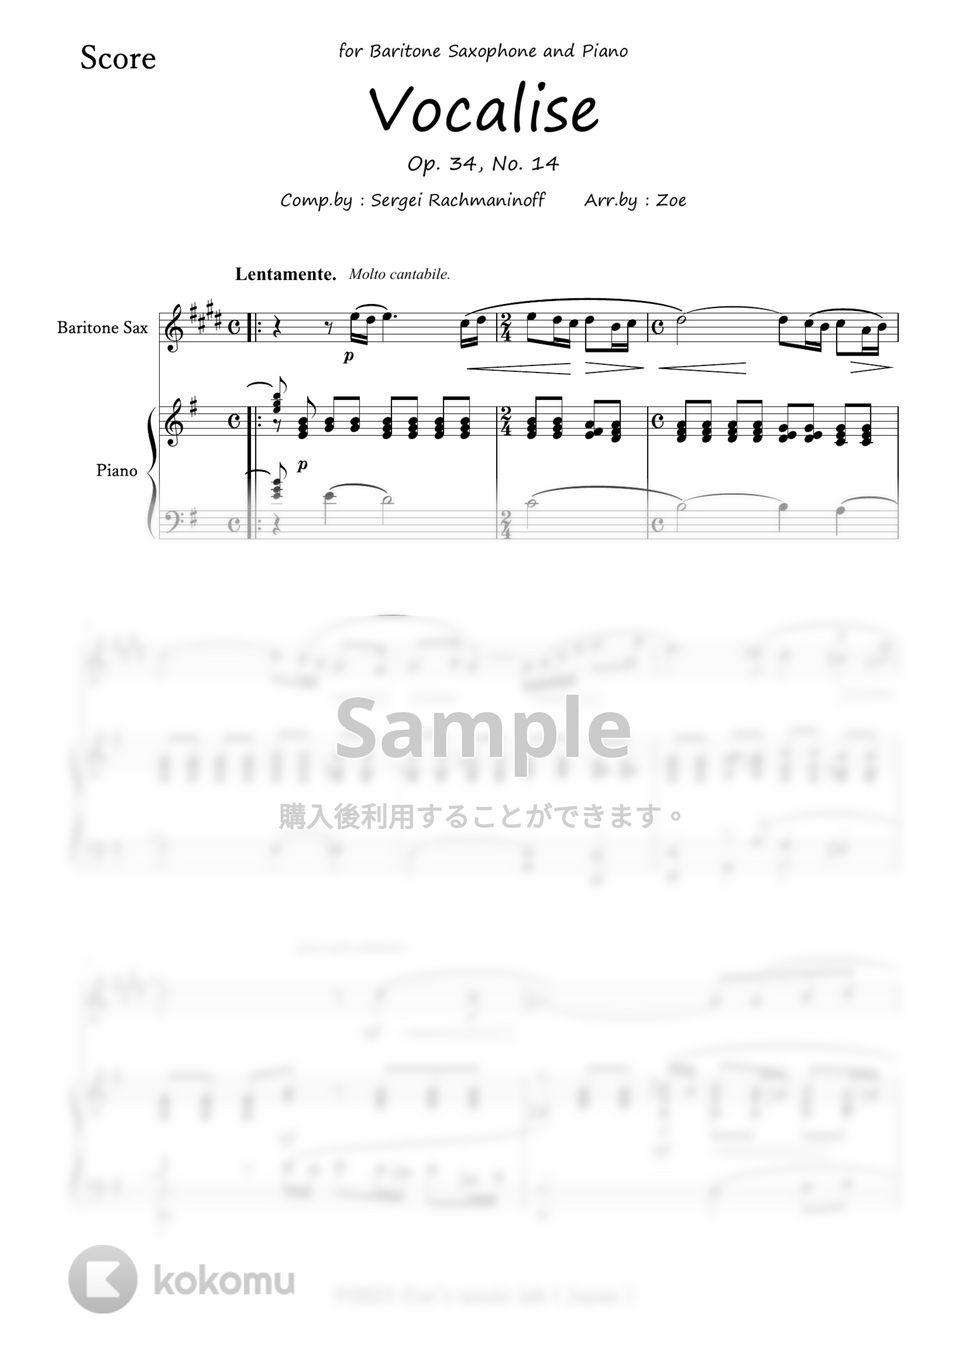 Rachmaninoff - Vocalise Op.34,No.14 / for Baritone Sax and Piano (ヴォカリーズ/ラフマニノフ/ピアノ/バリトンサックス/バリサク) by Zoe